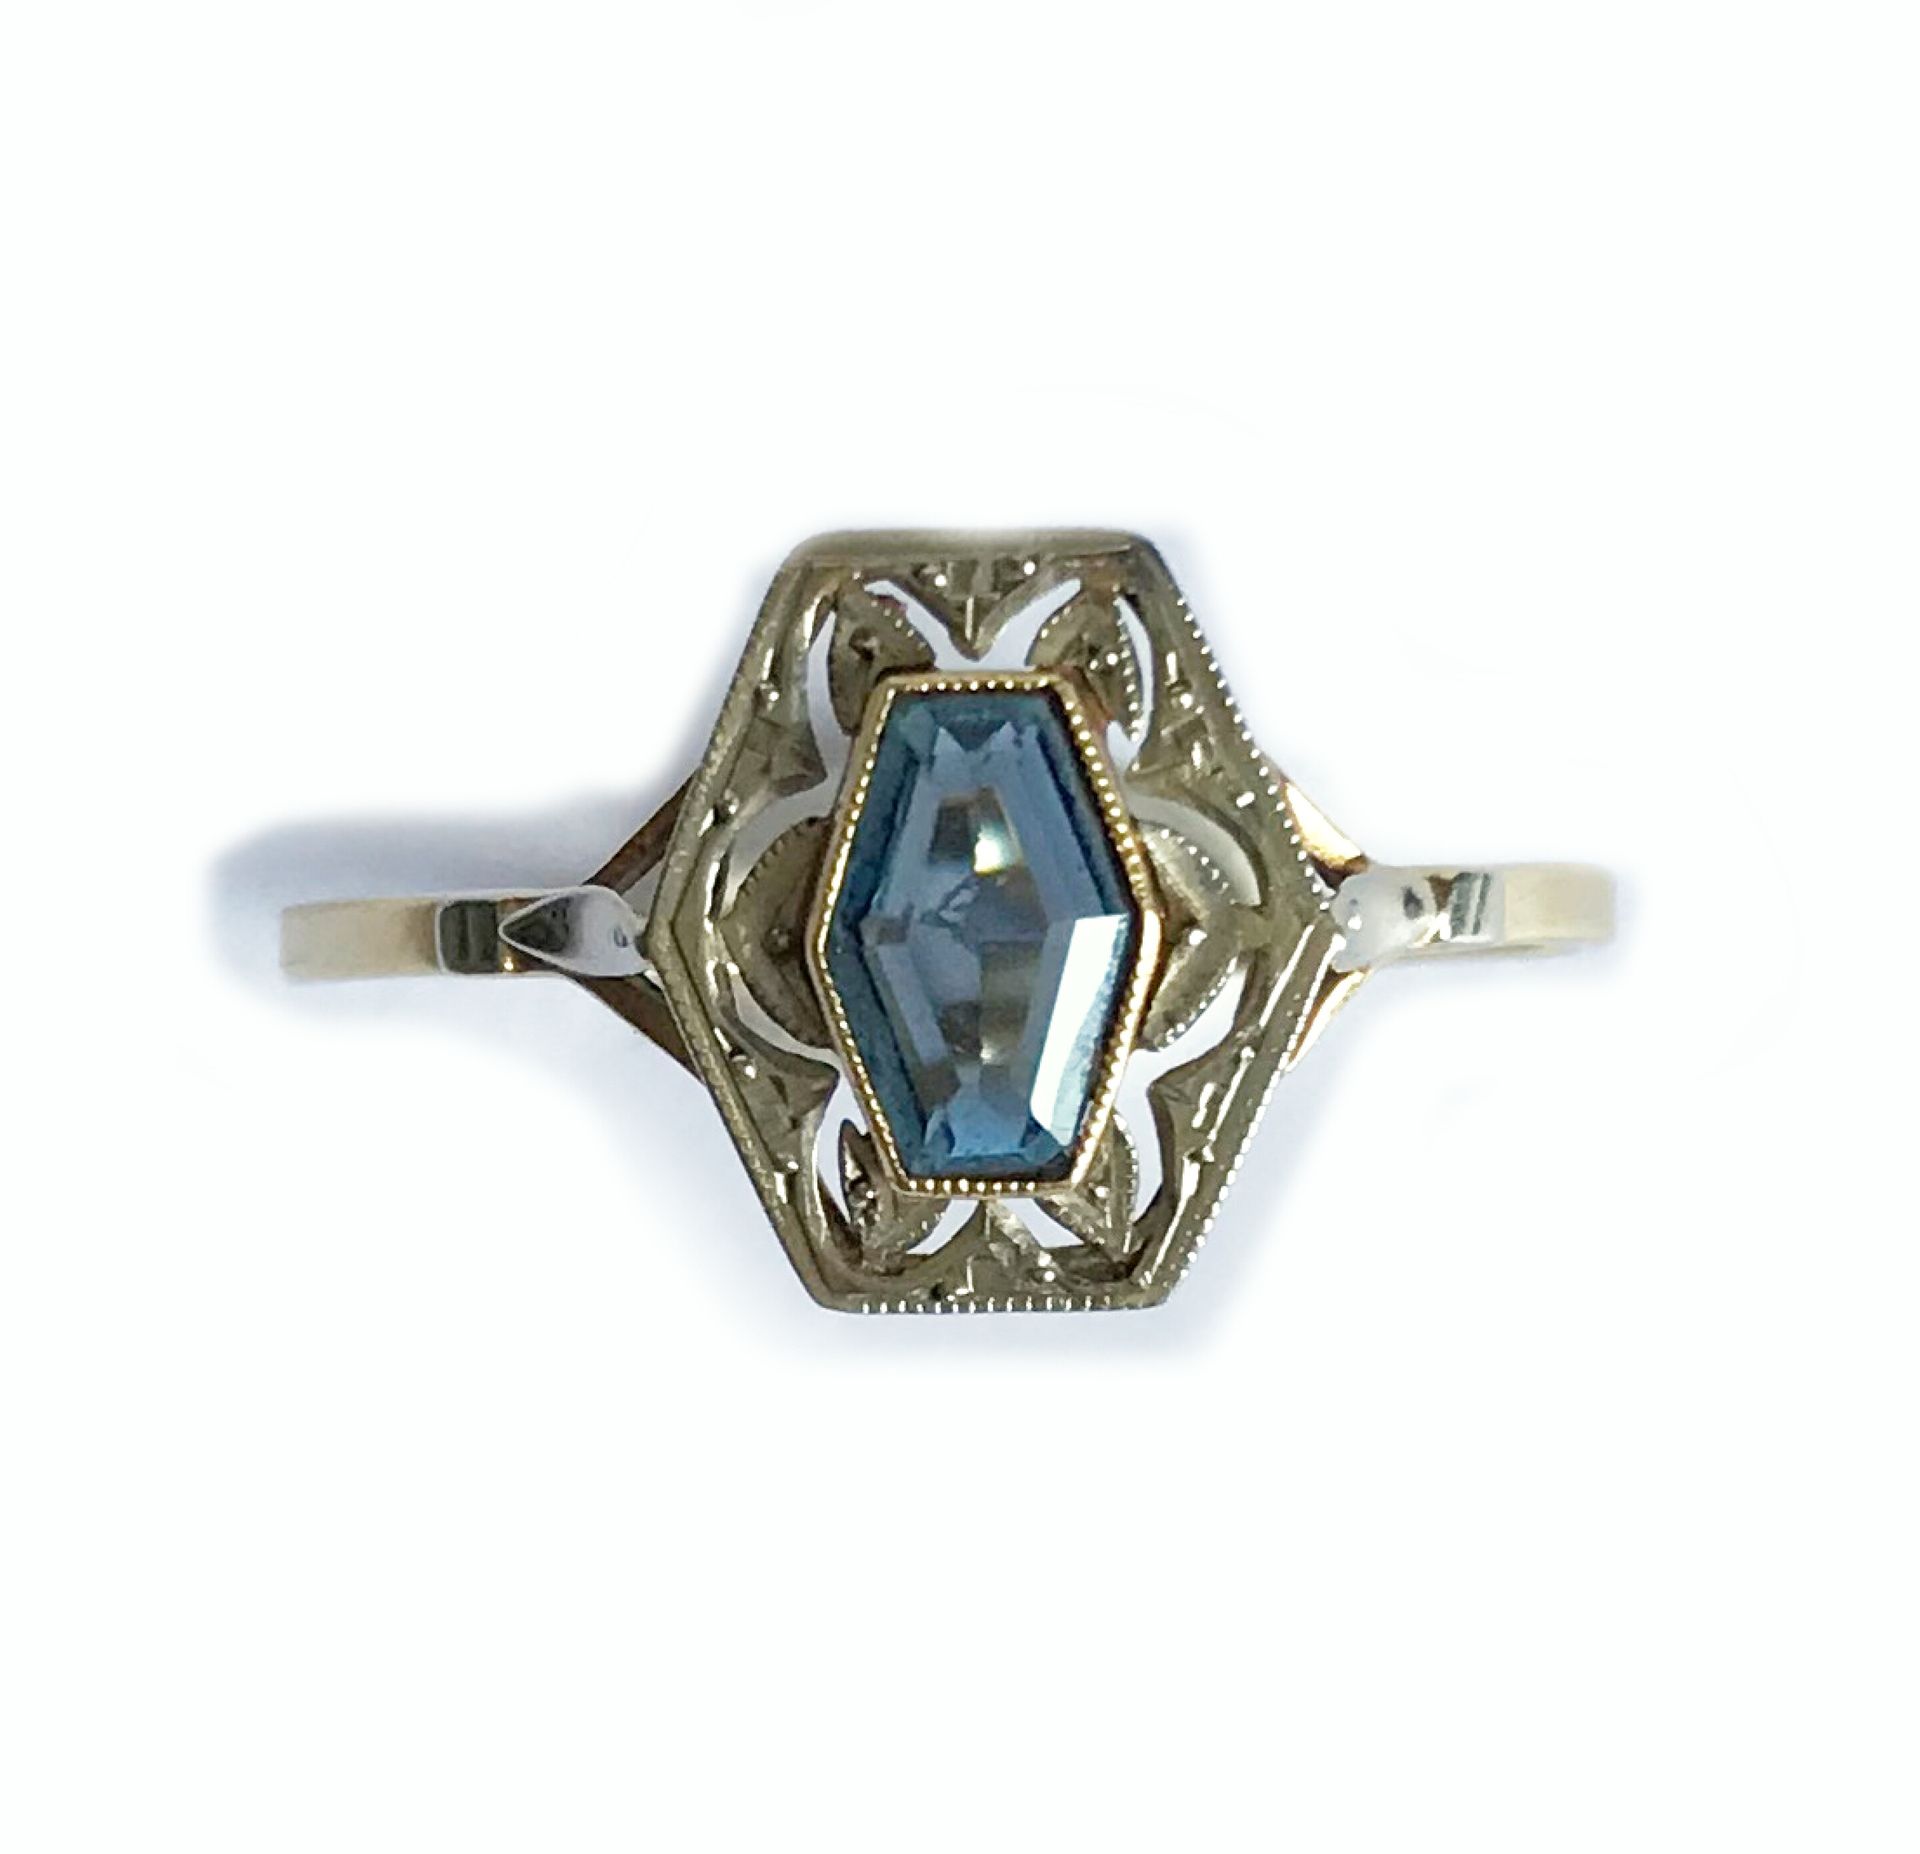 Null 金戒指上镶嵌着一颗多角形的彩色宝石，在镂空的框架中，形成了装饰艺术风格的花朵。

毛重 : 1,35 g